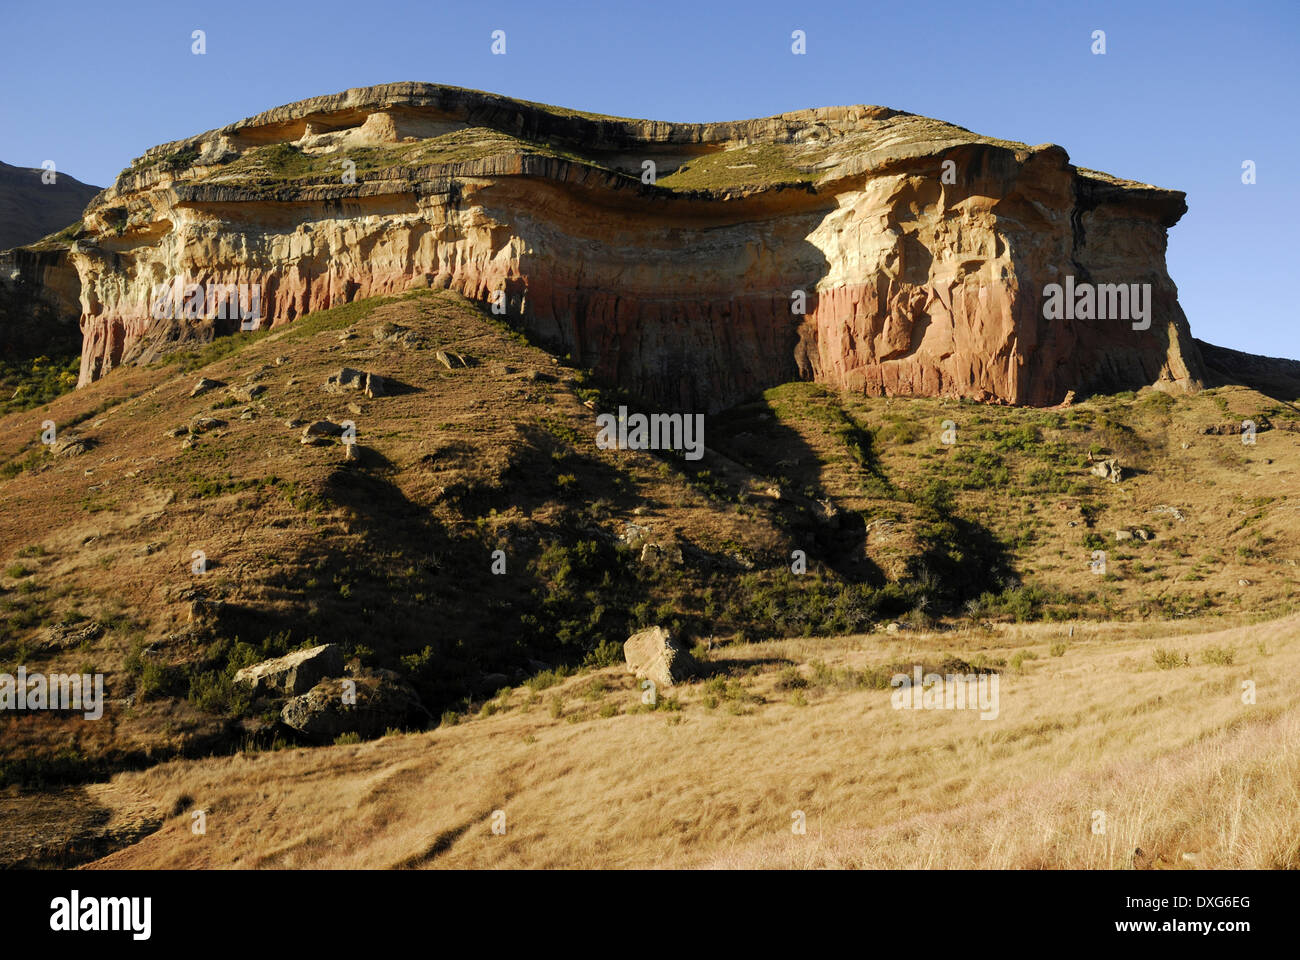 Mushroom Rocks sandstone cliffs at Golden Gate National Park,eastern Freestate, South Africa Stock Photo